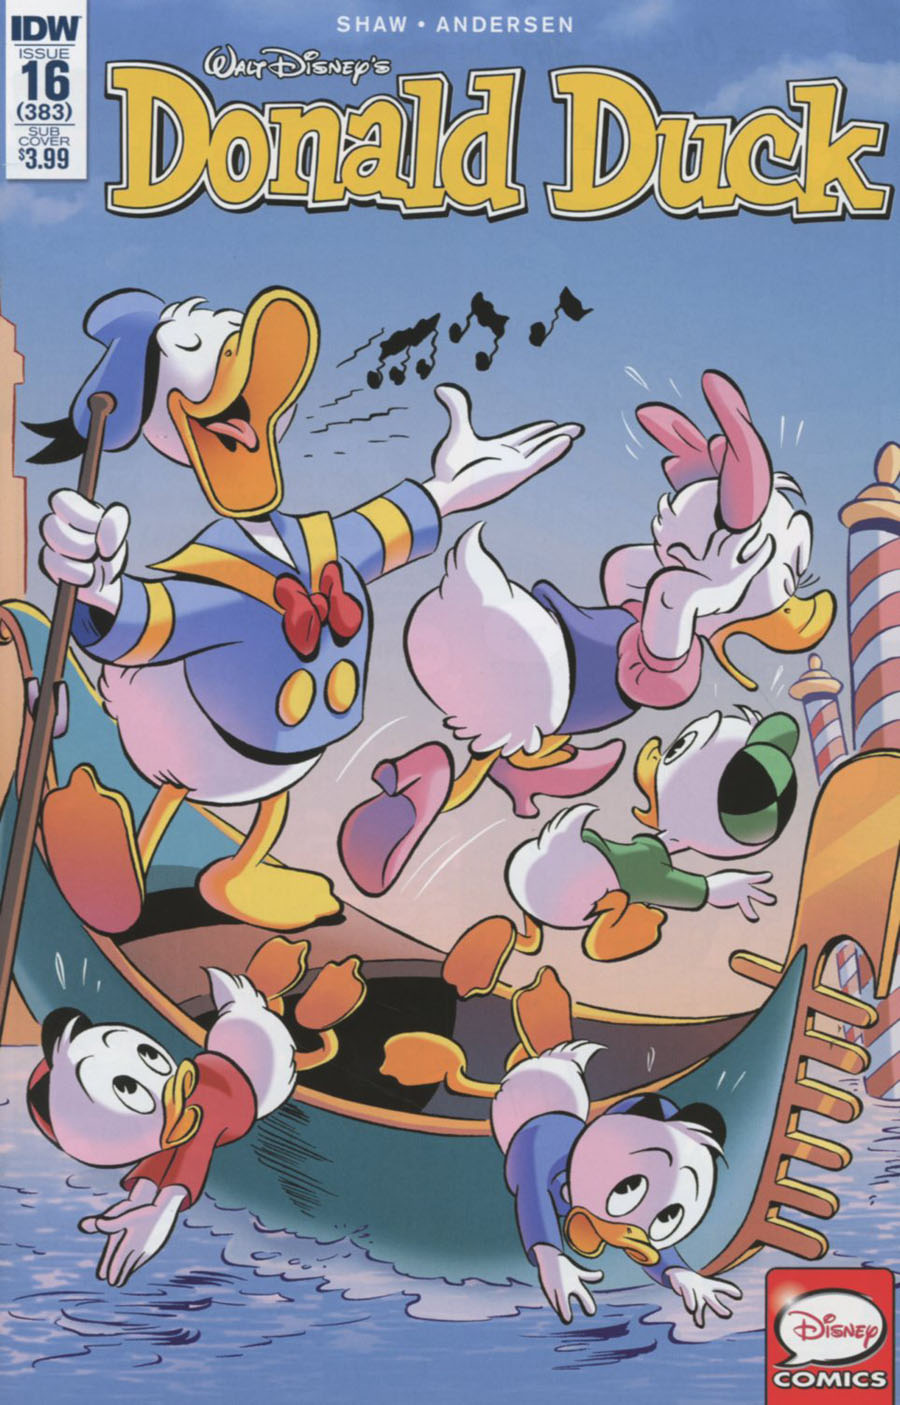 Donald Duck Vol 2 #16 Cover B Variant Daniel Branca Subscription Cover